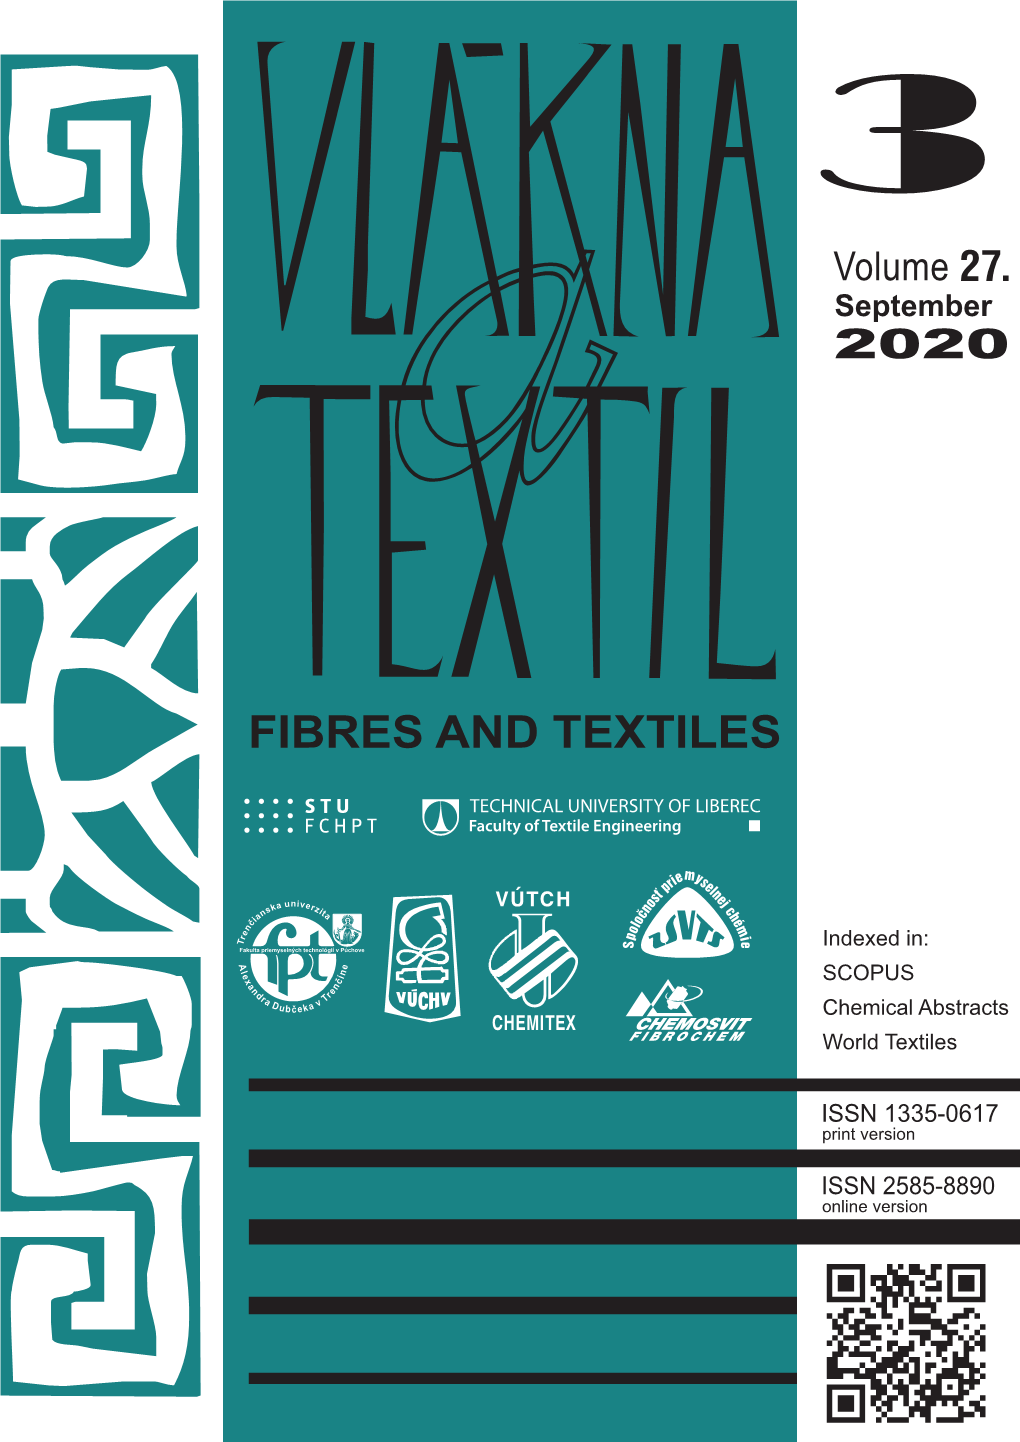 September 2020 Fibres and Textiles Vlákna a Textil